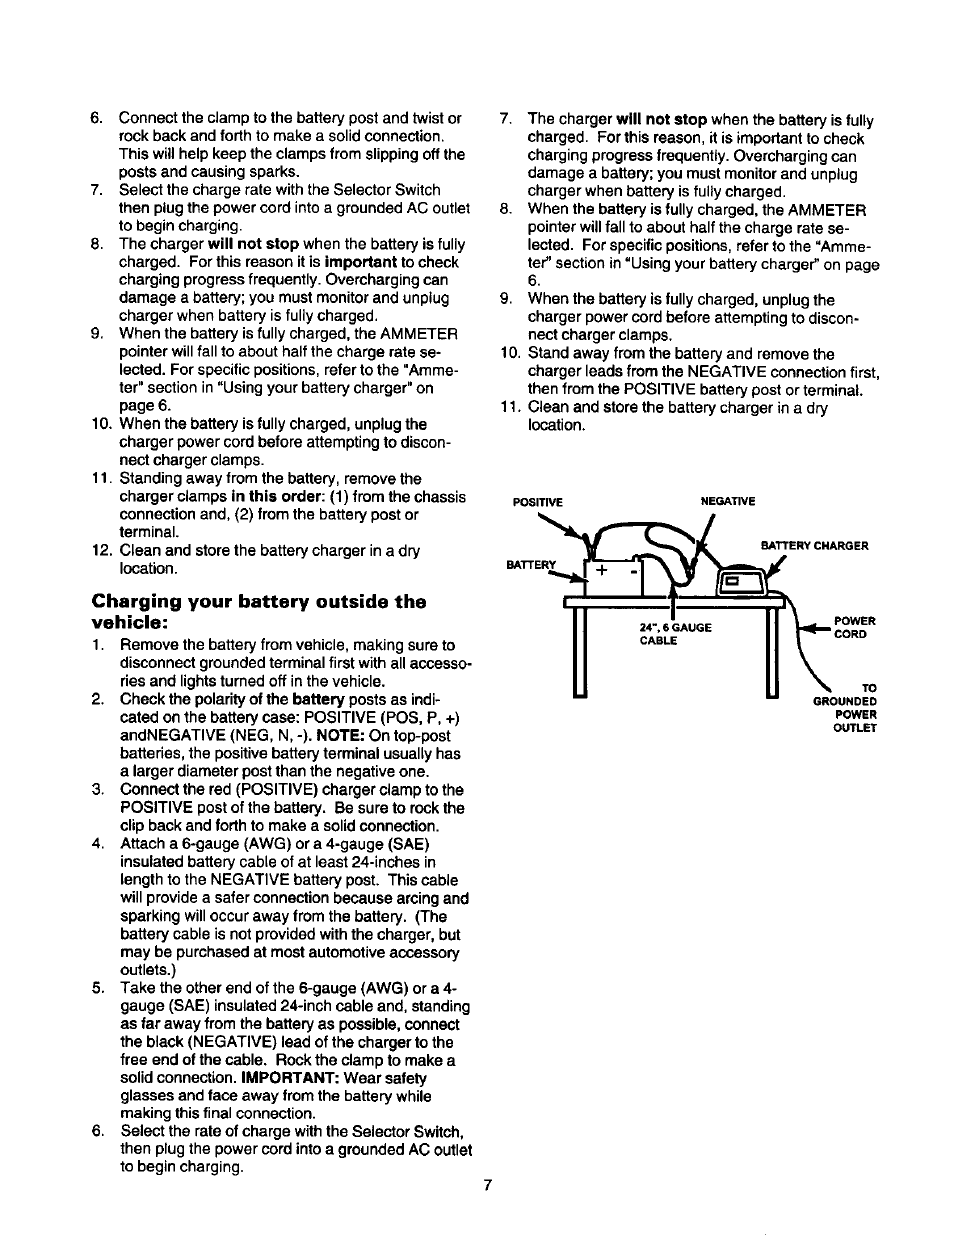 Sears 200.71221 User Manual | Page 8 / 11